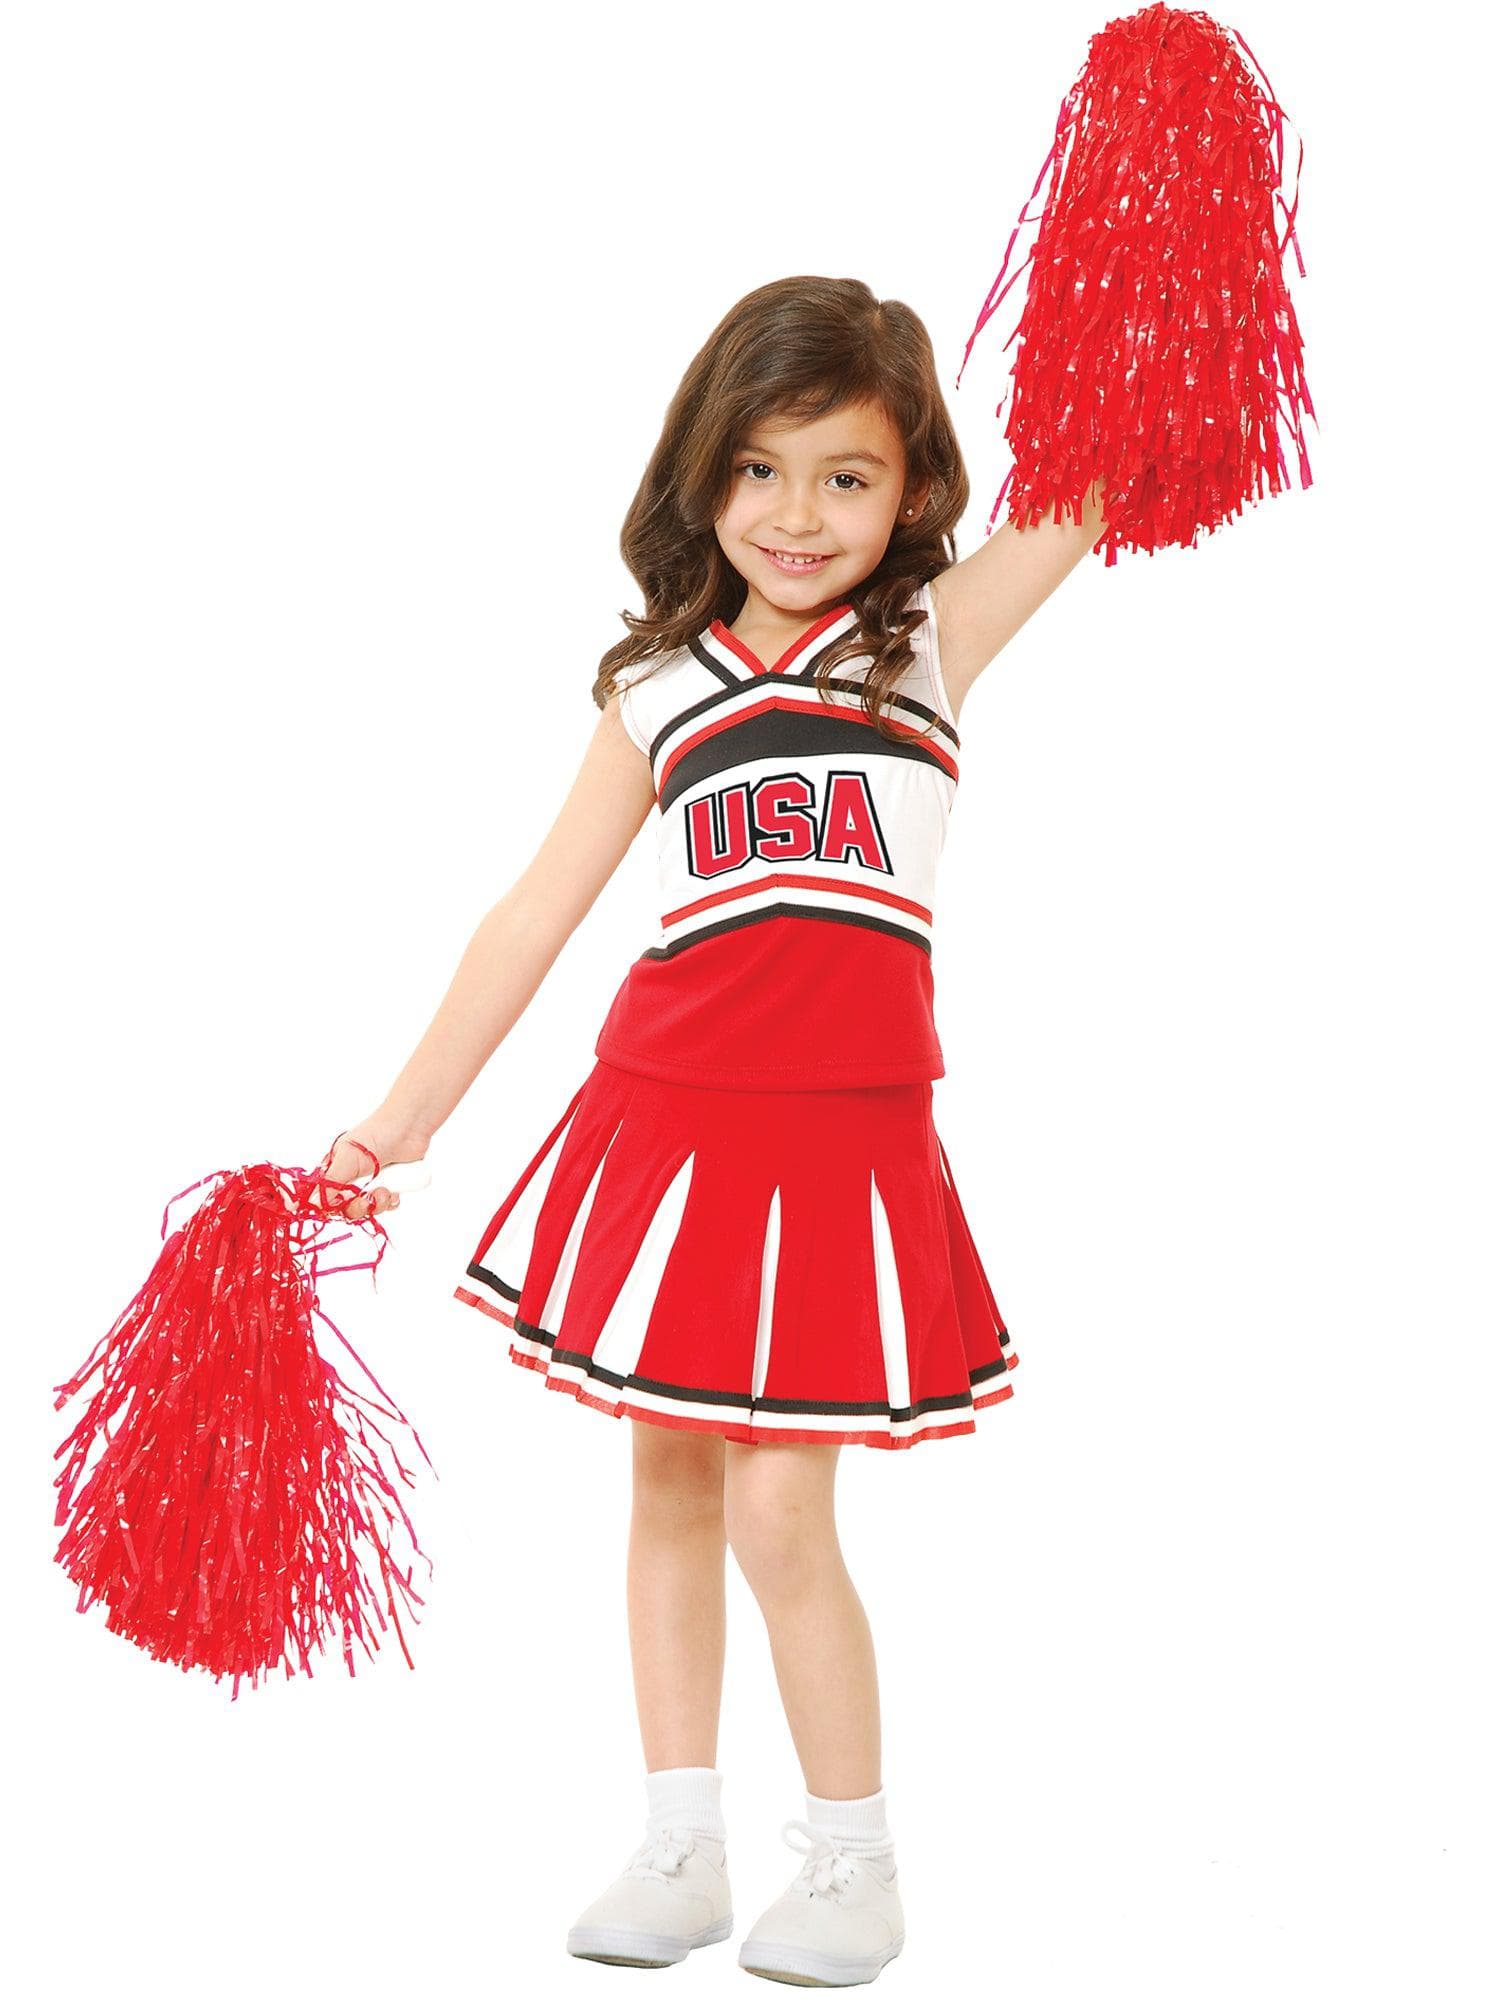 Kids' USA Cheerleader Costume - costumes.com